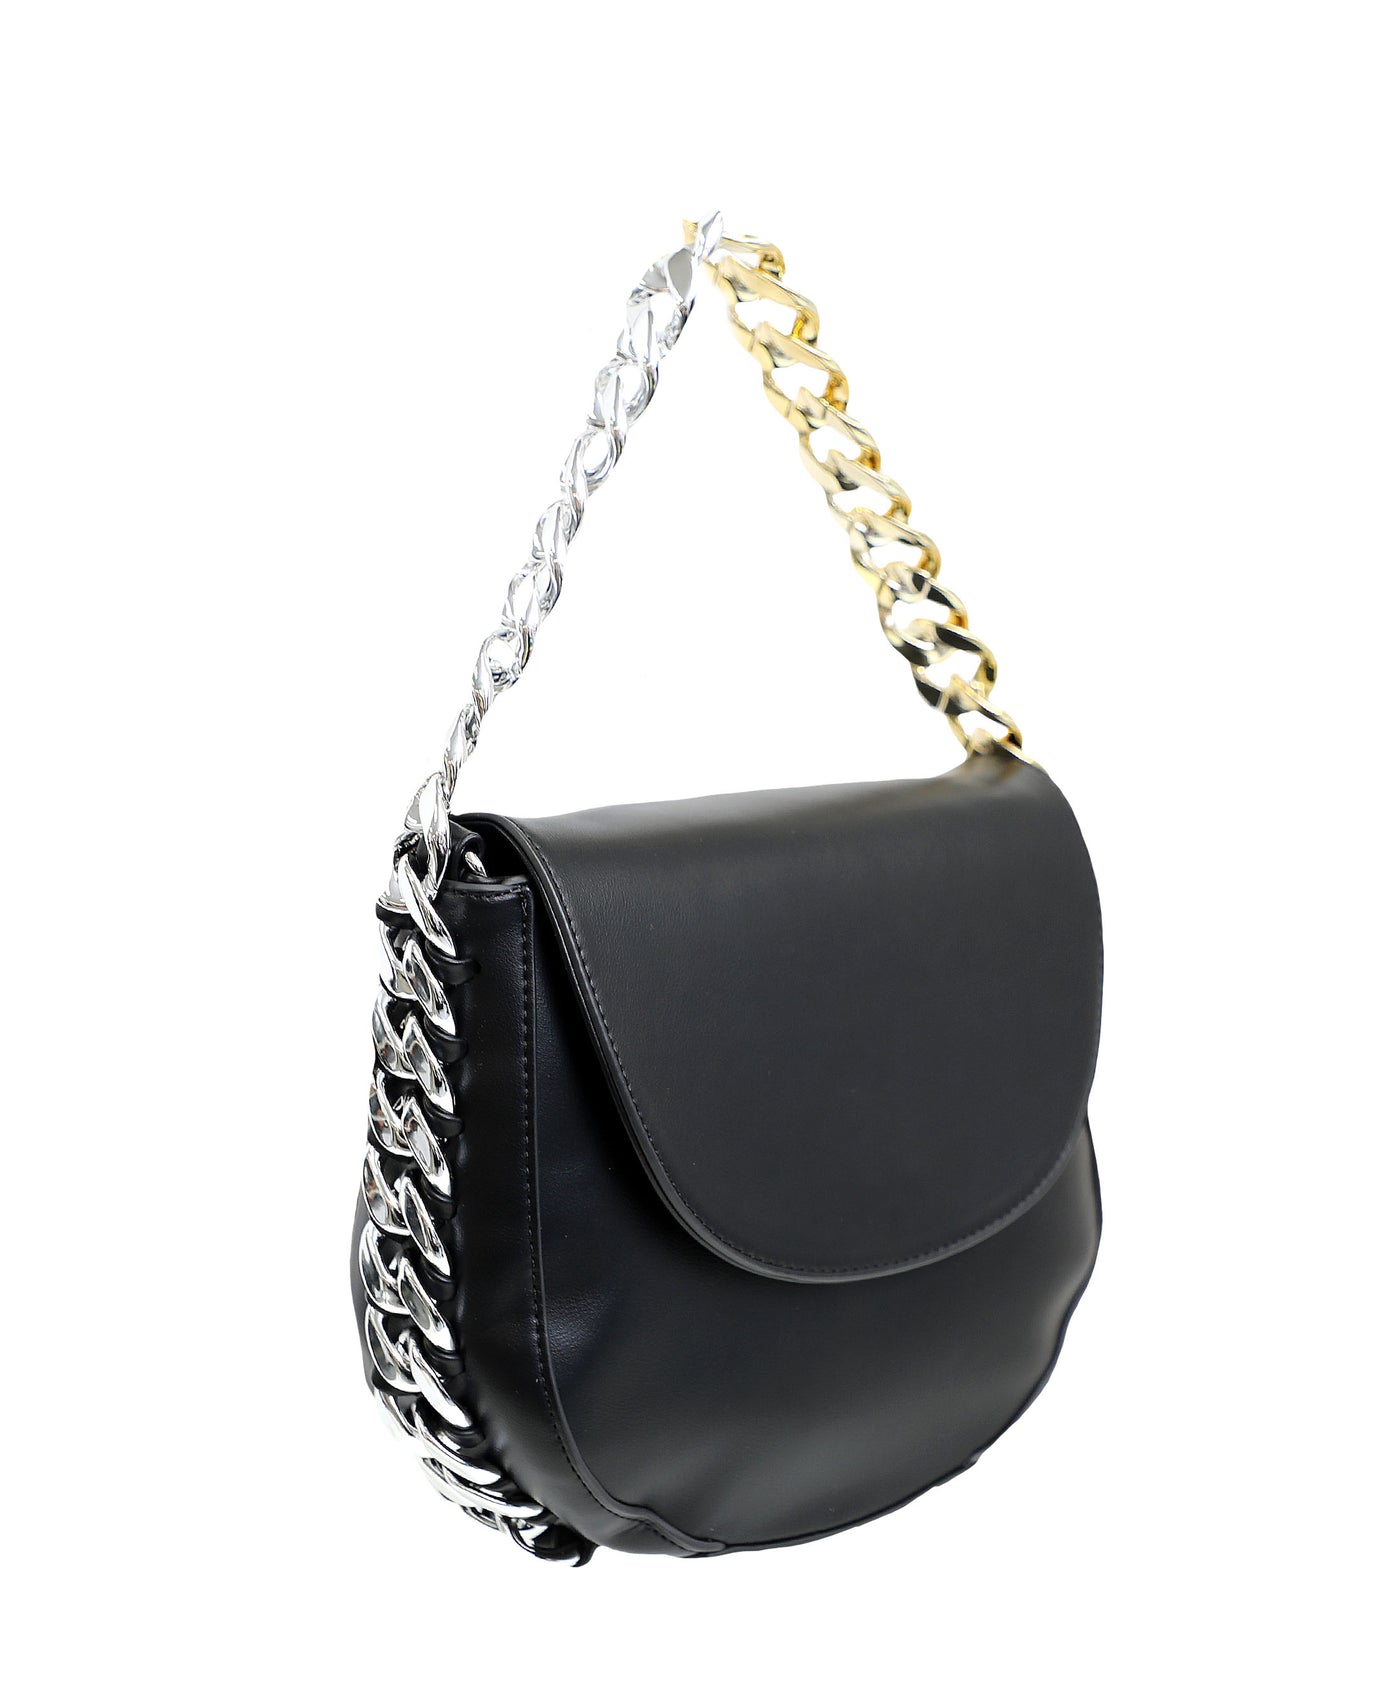 Half-Moon Handbag w/ Two-Tone Chain Strap image 2